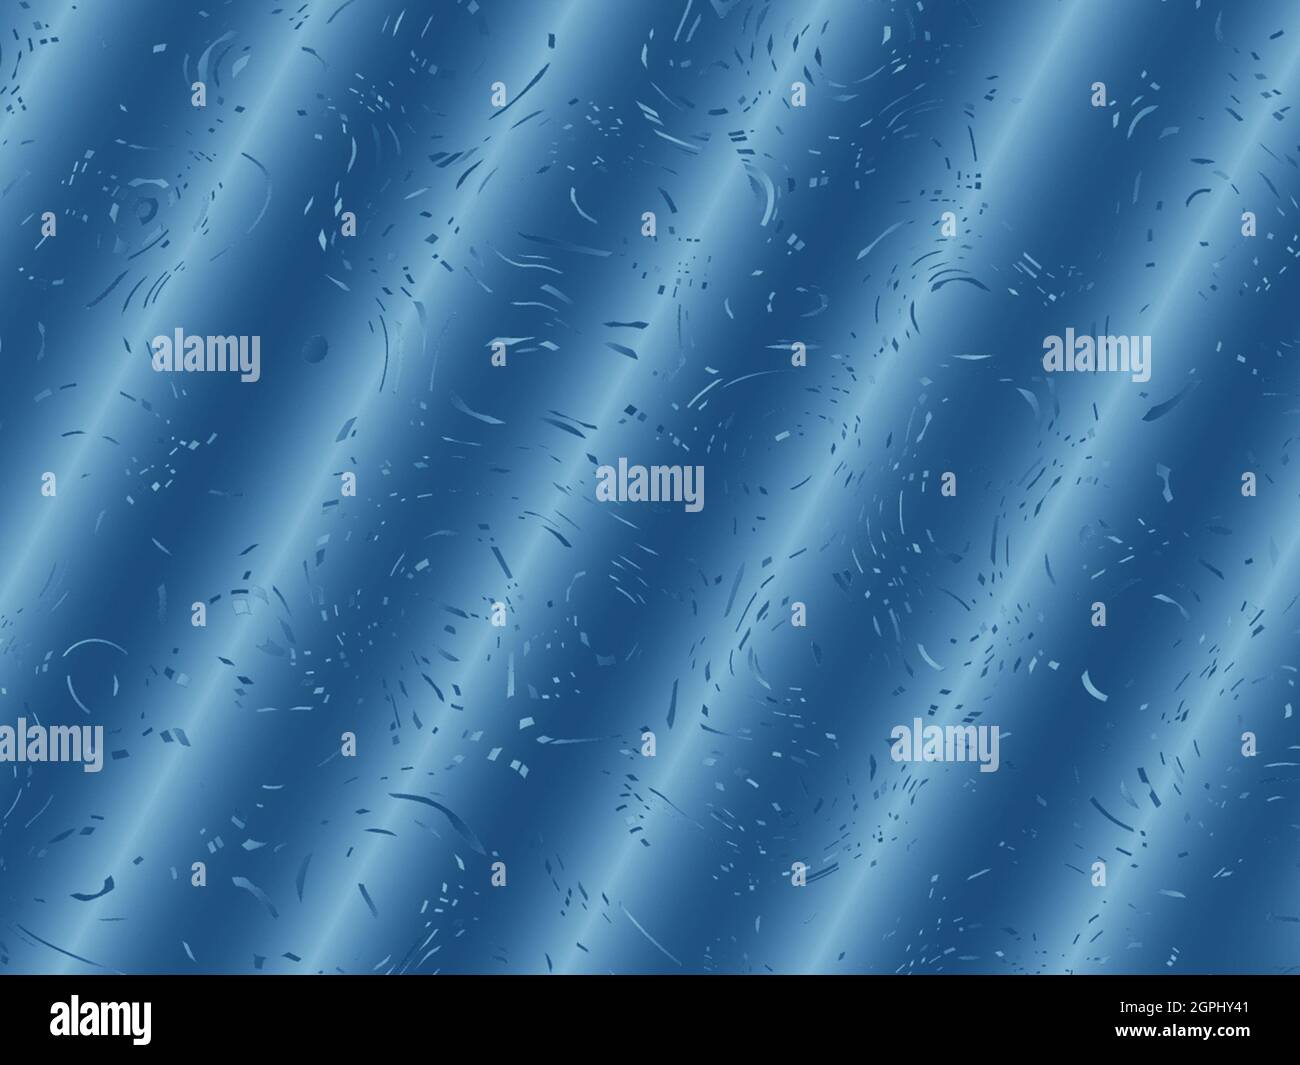 Abstract background, blue gradient decorative vibrant creative diagonal shining illustration pattern Stock Photo